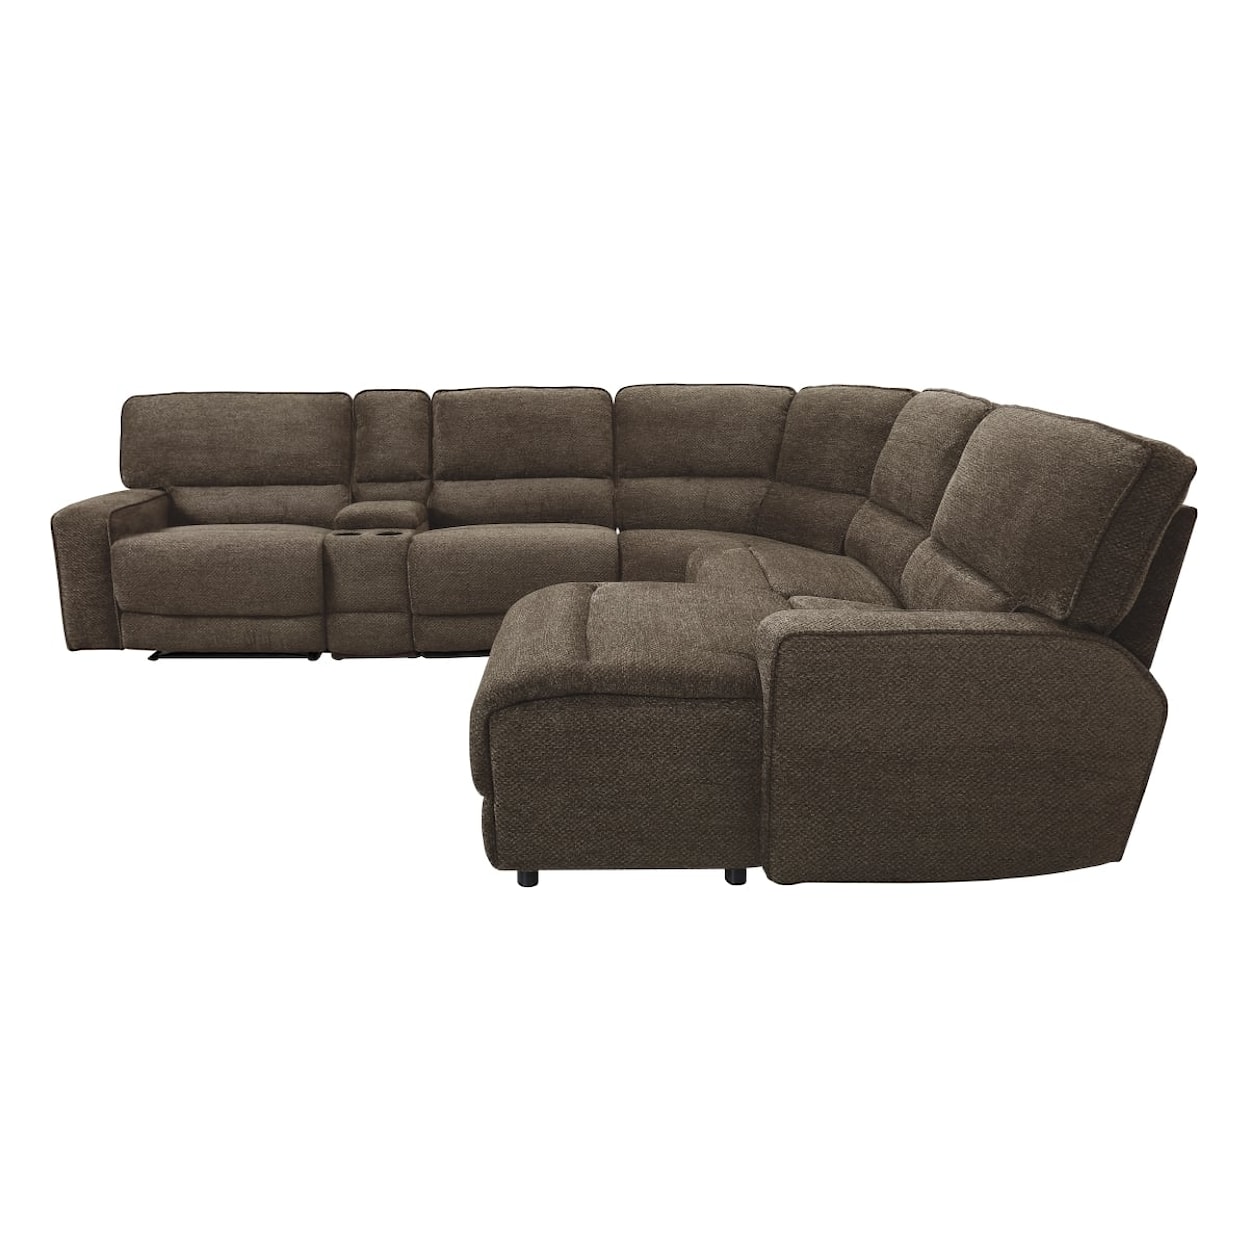 Homelegance Furniture Shreveport 6-Piece Modular Reclining Sectional Sofa